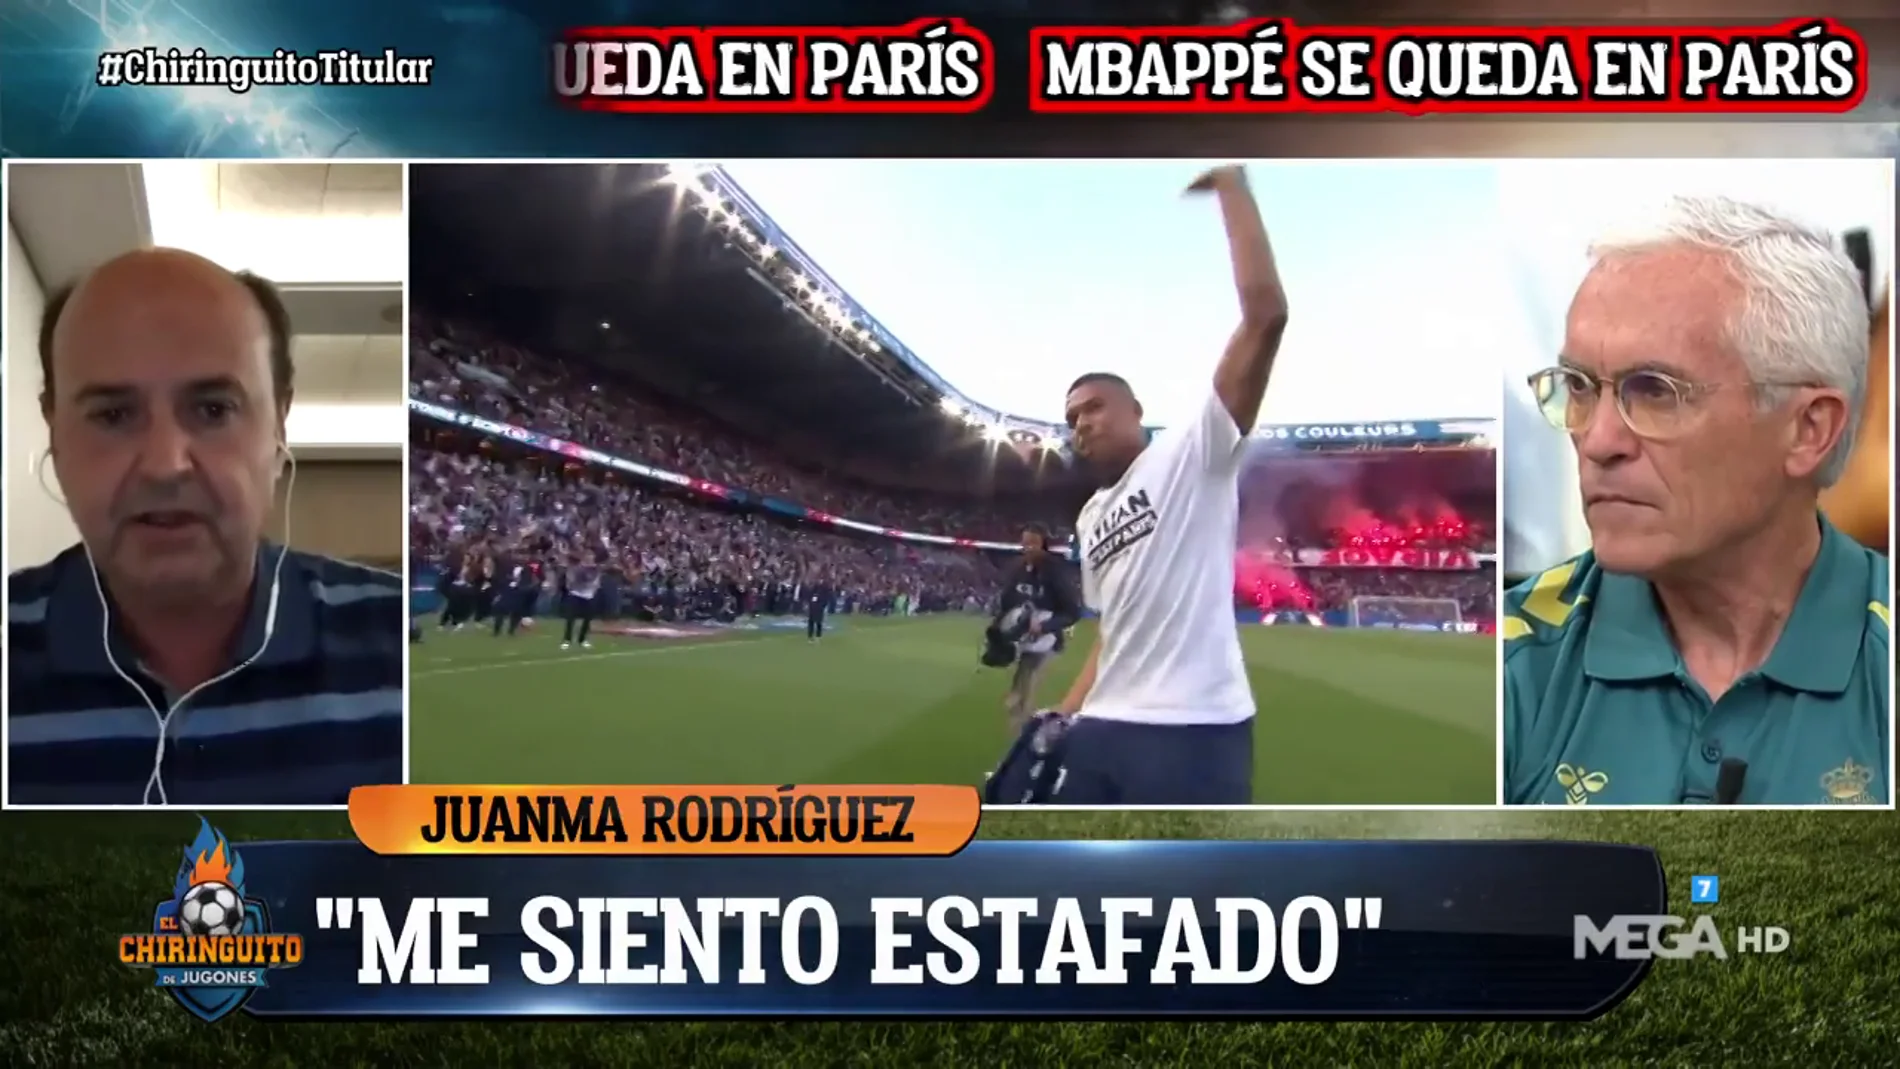 Juanma Rodríguez: "Me siento estafado. Mbappé ha utilizado al Madrid"